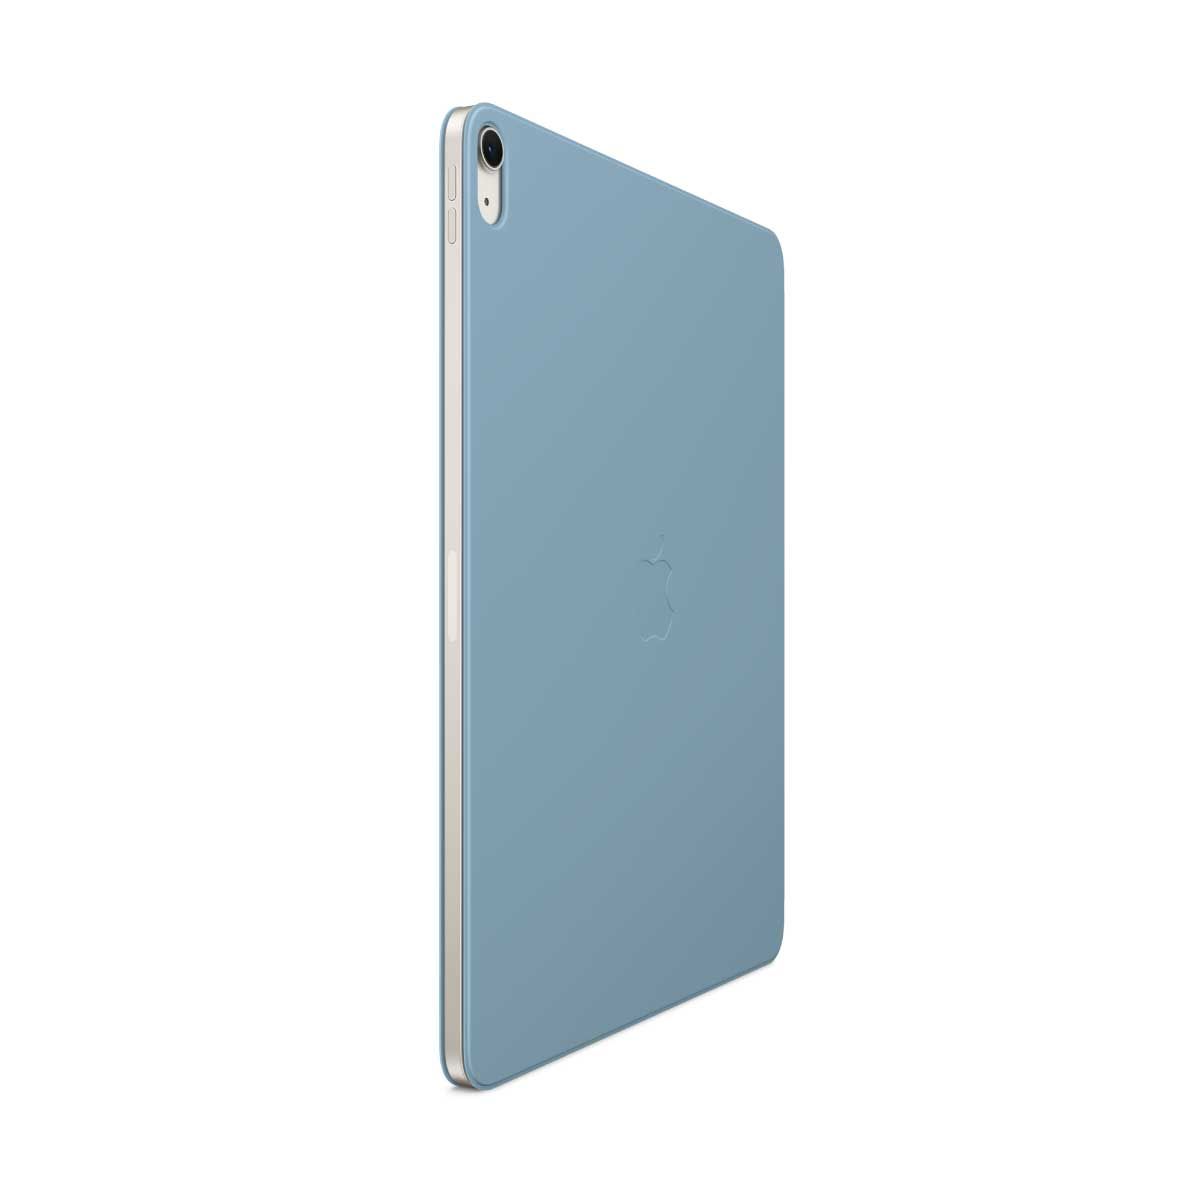 Apple Smart Folio สำหรับ iPad Air รุ่น 13 นิ้ว (ชิป M2) - สีเทาชาร์โคล